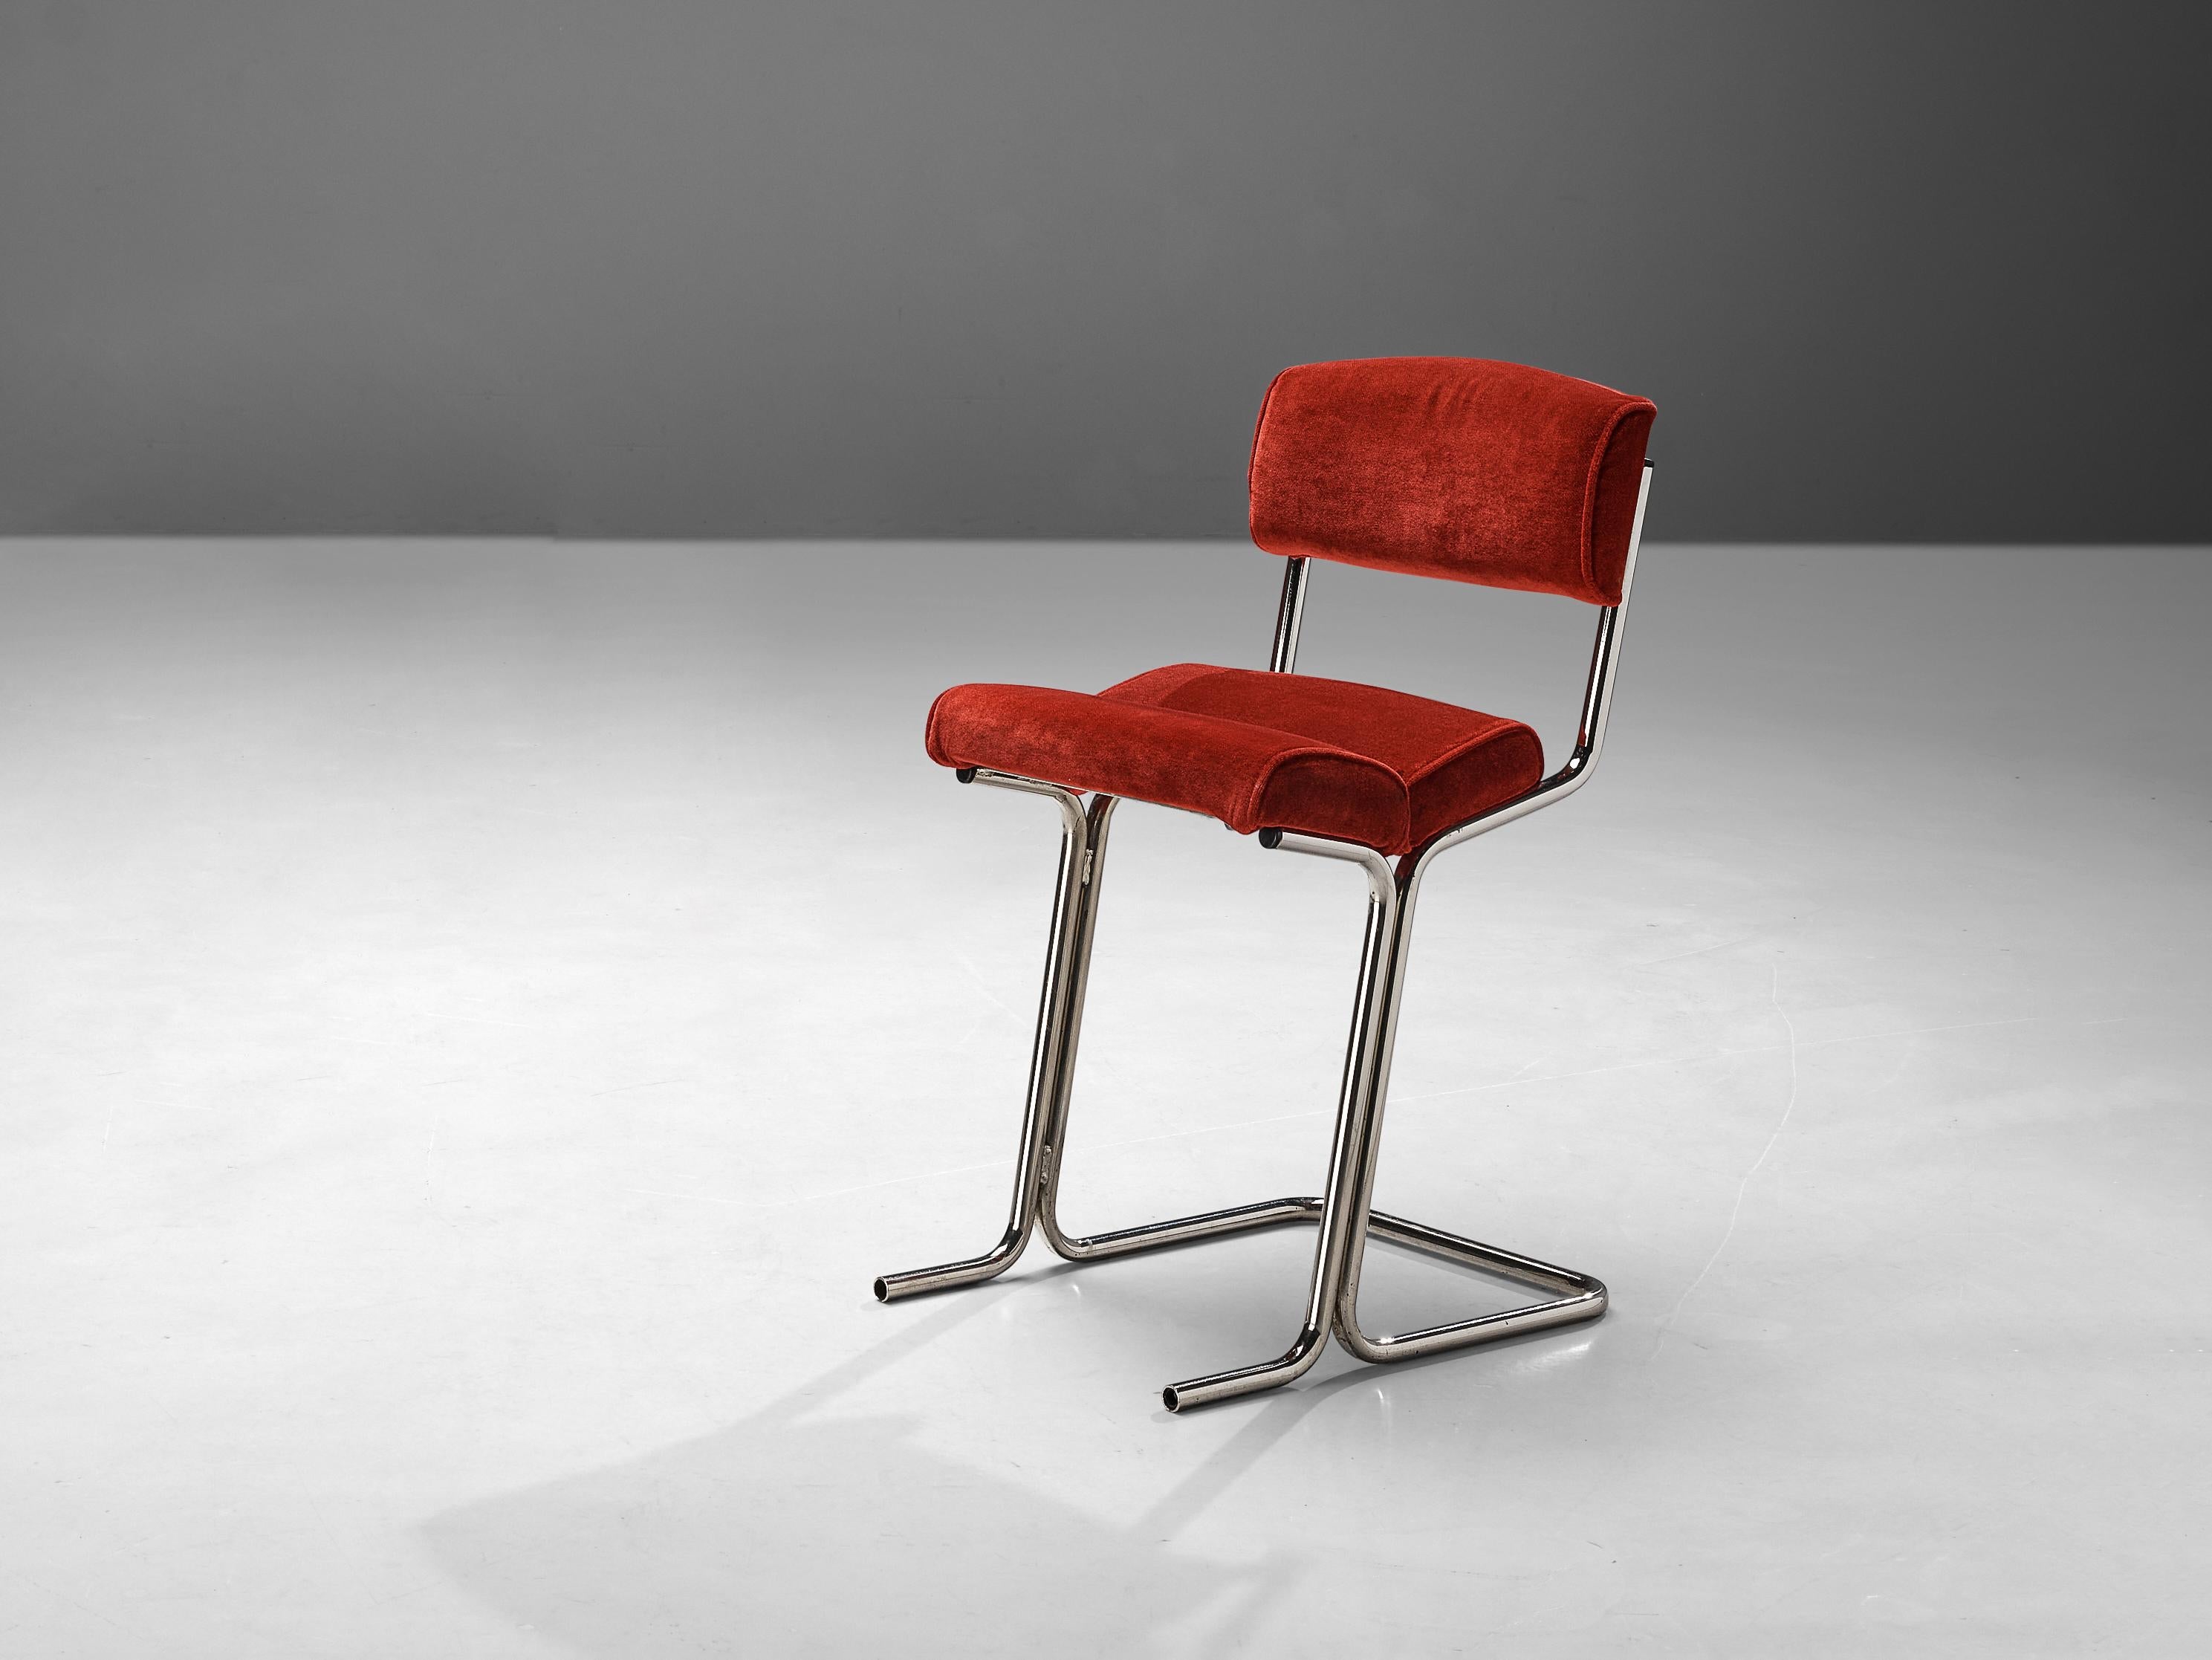 French Counter Chair in Red Velvet Upholstery